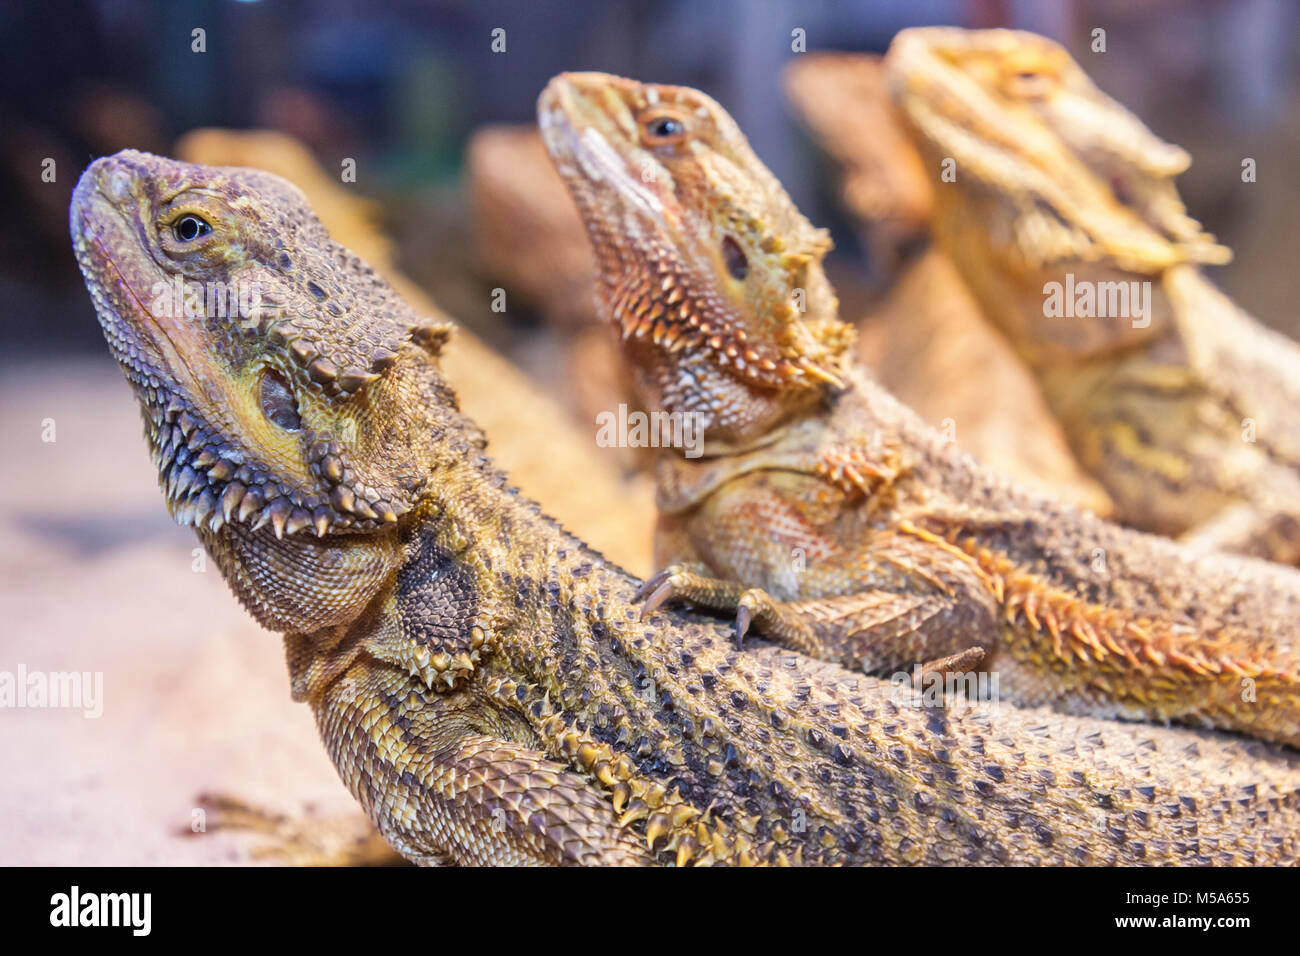 Miami Beach Florida,three bearded dragon lizards,reptile,Australia native,exotic pets,FL080328012 Stock Photo